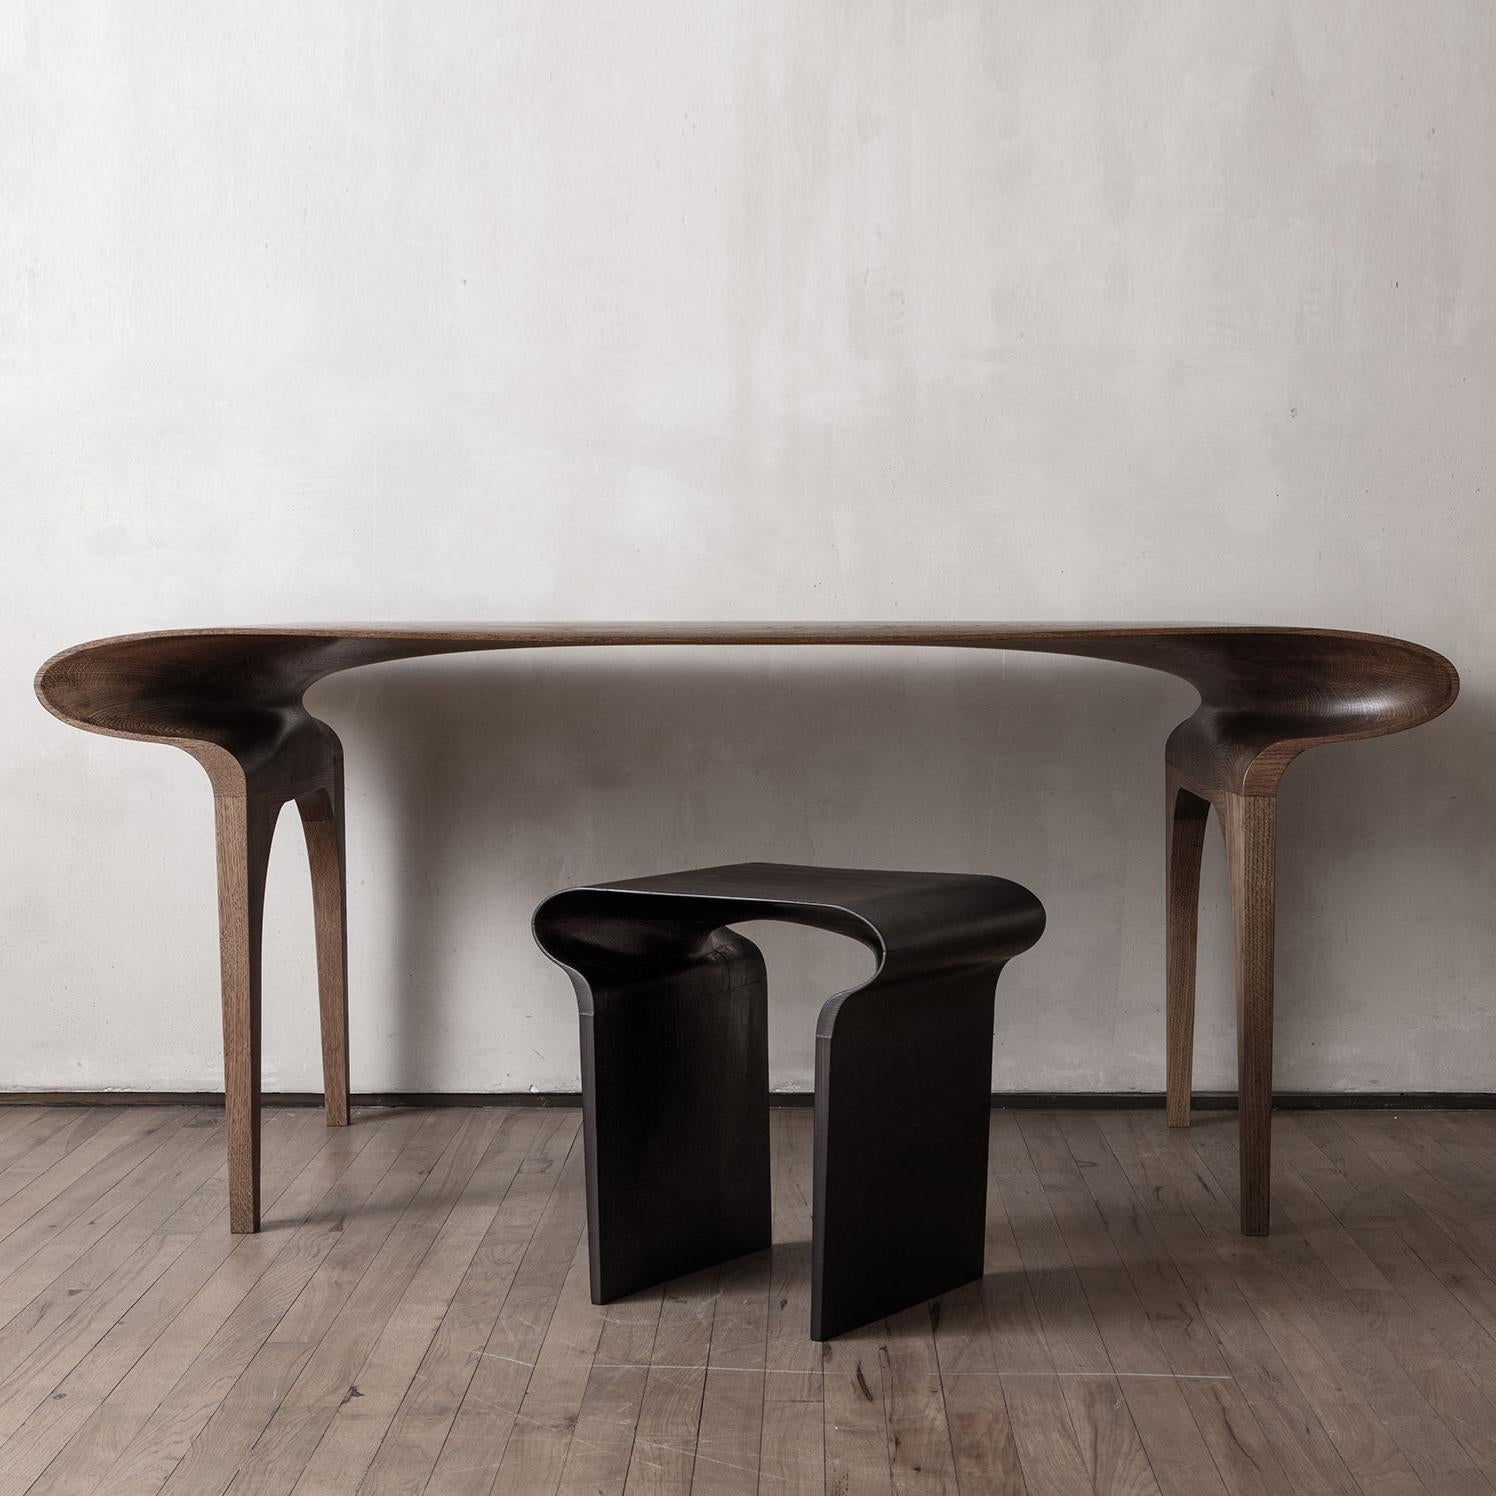 Contemporary Contour Table by Bodo Sperlein For Sale